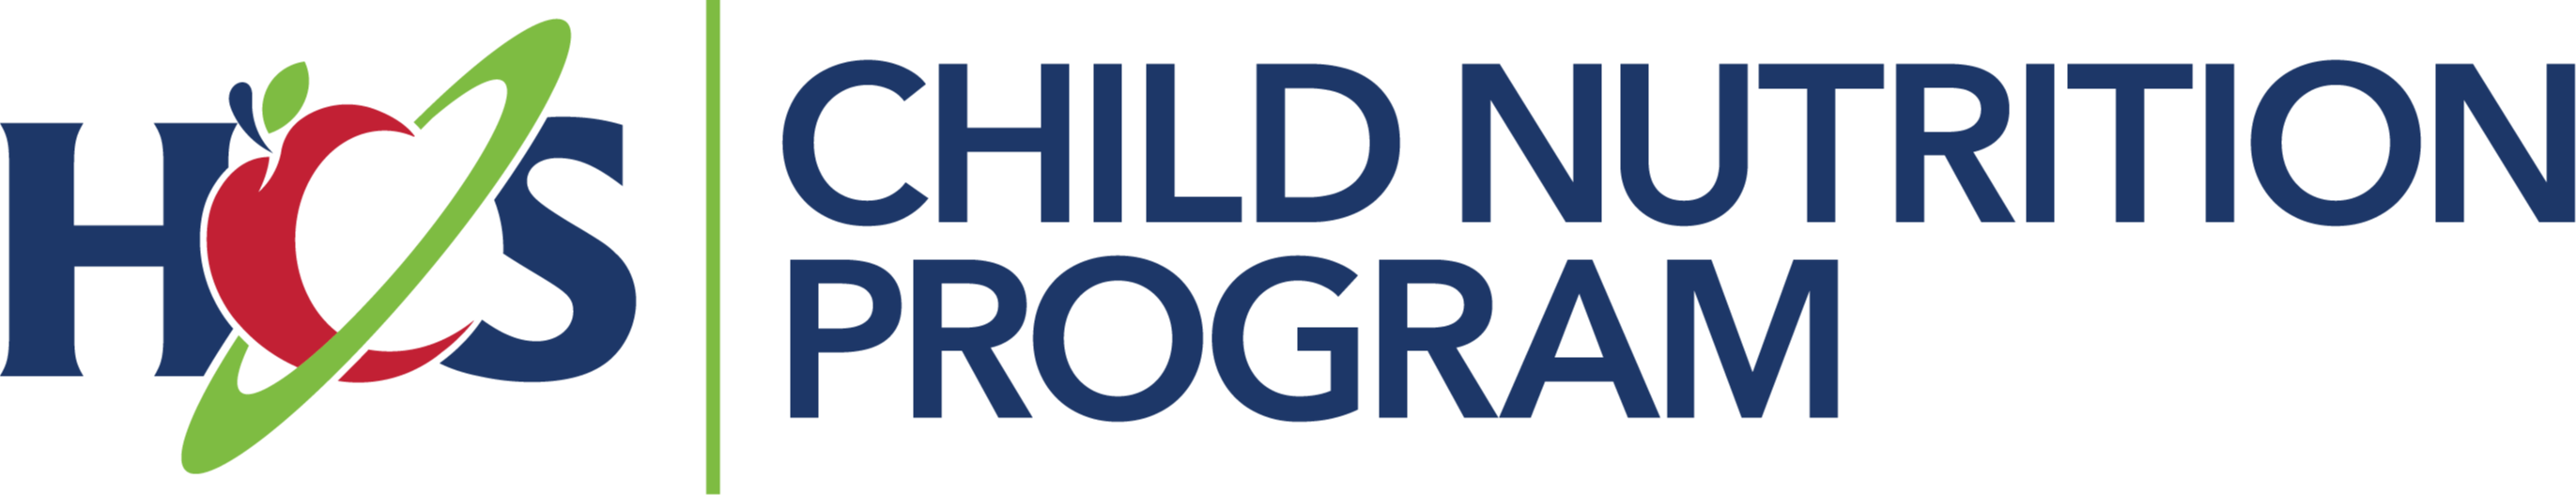 child nutrition logo